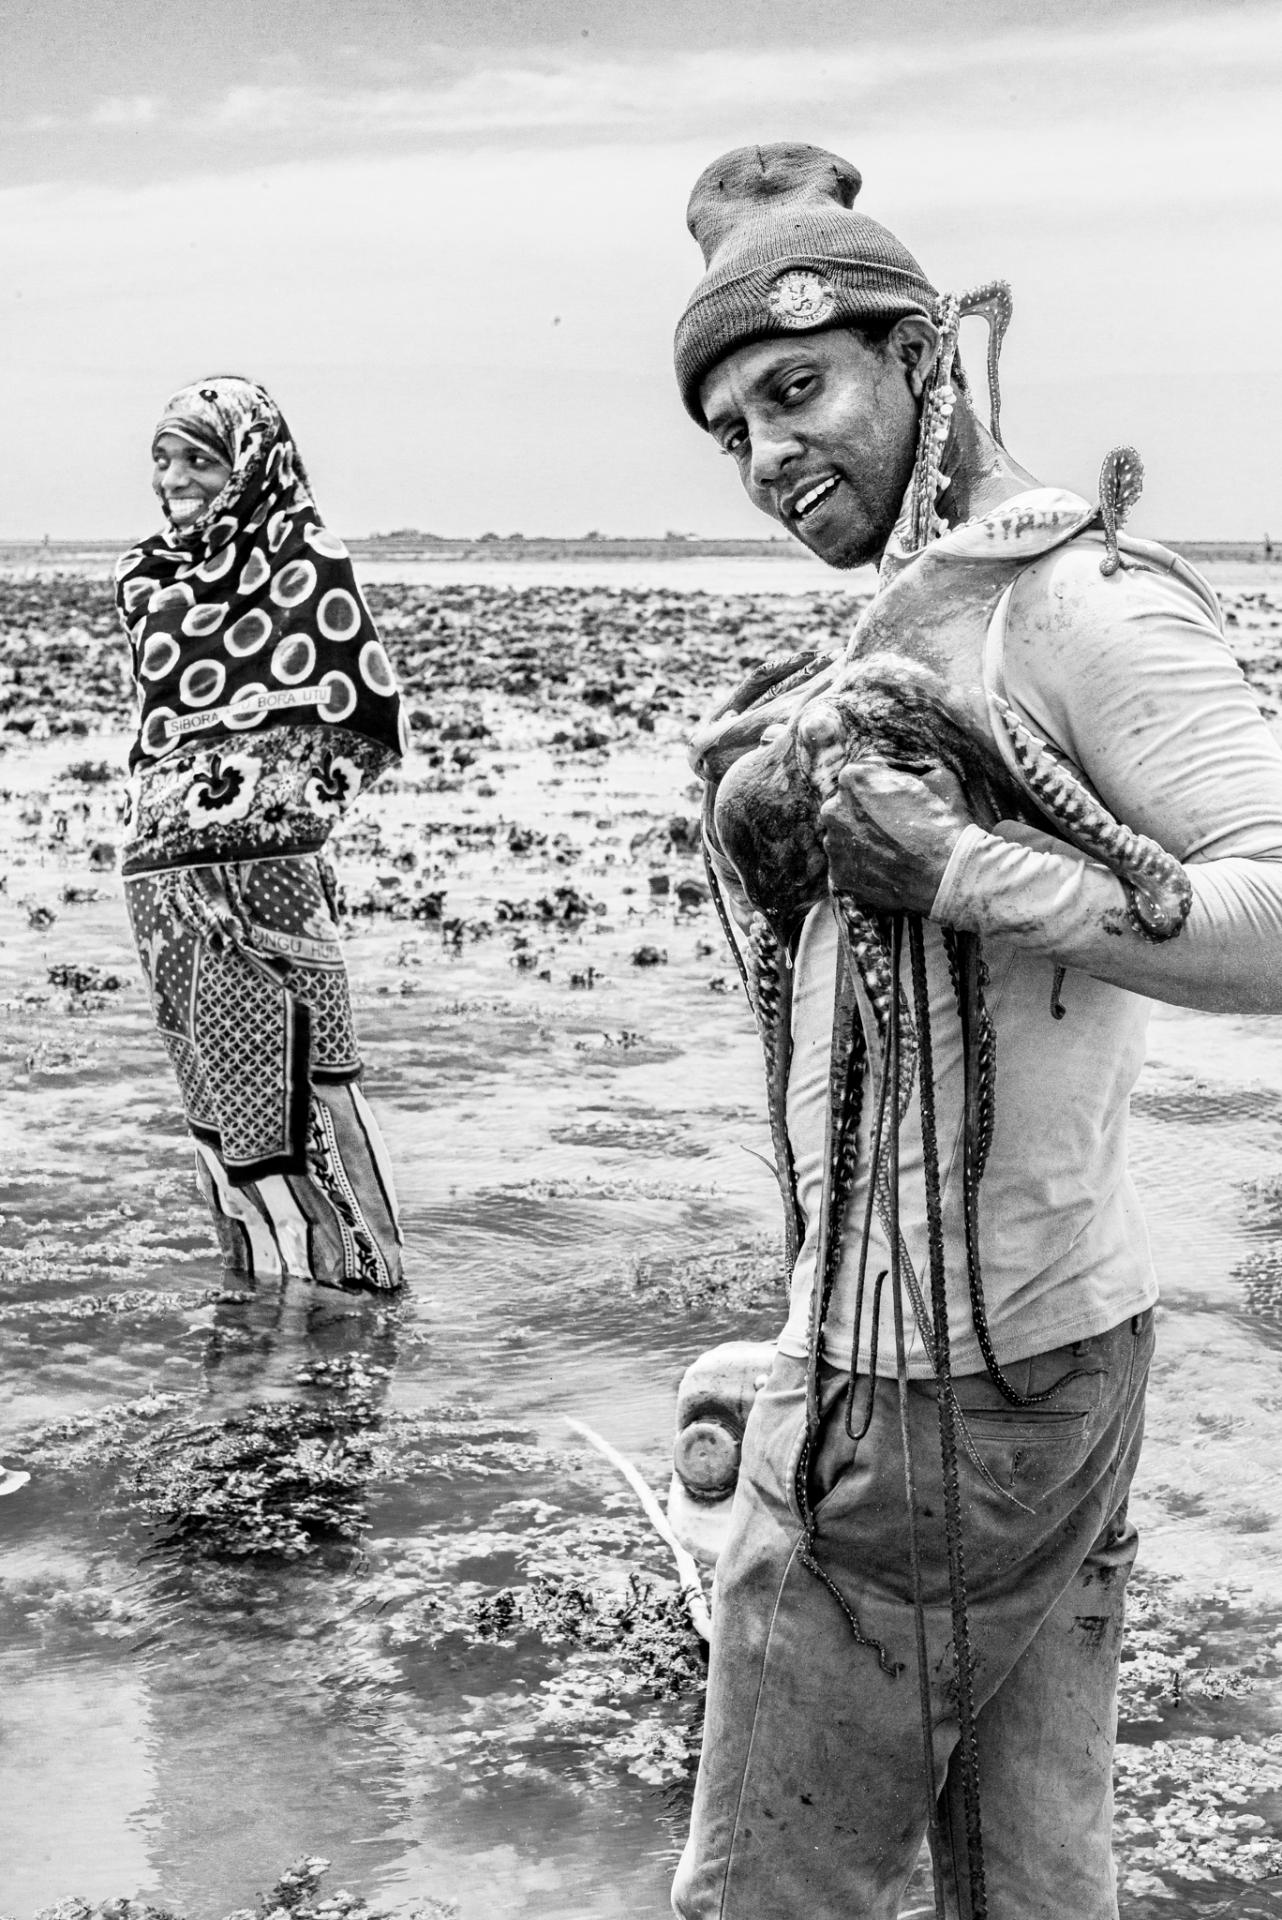 New York Photography Awards Winner - The Octopus Hunters